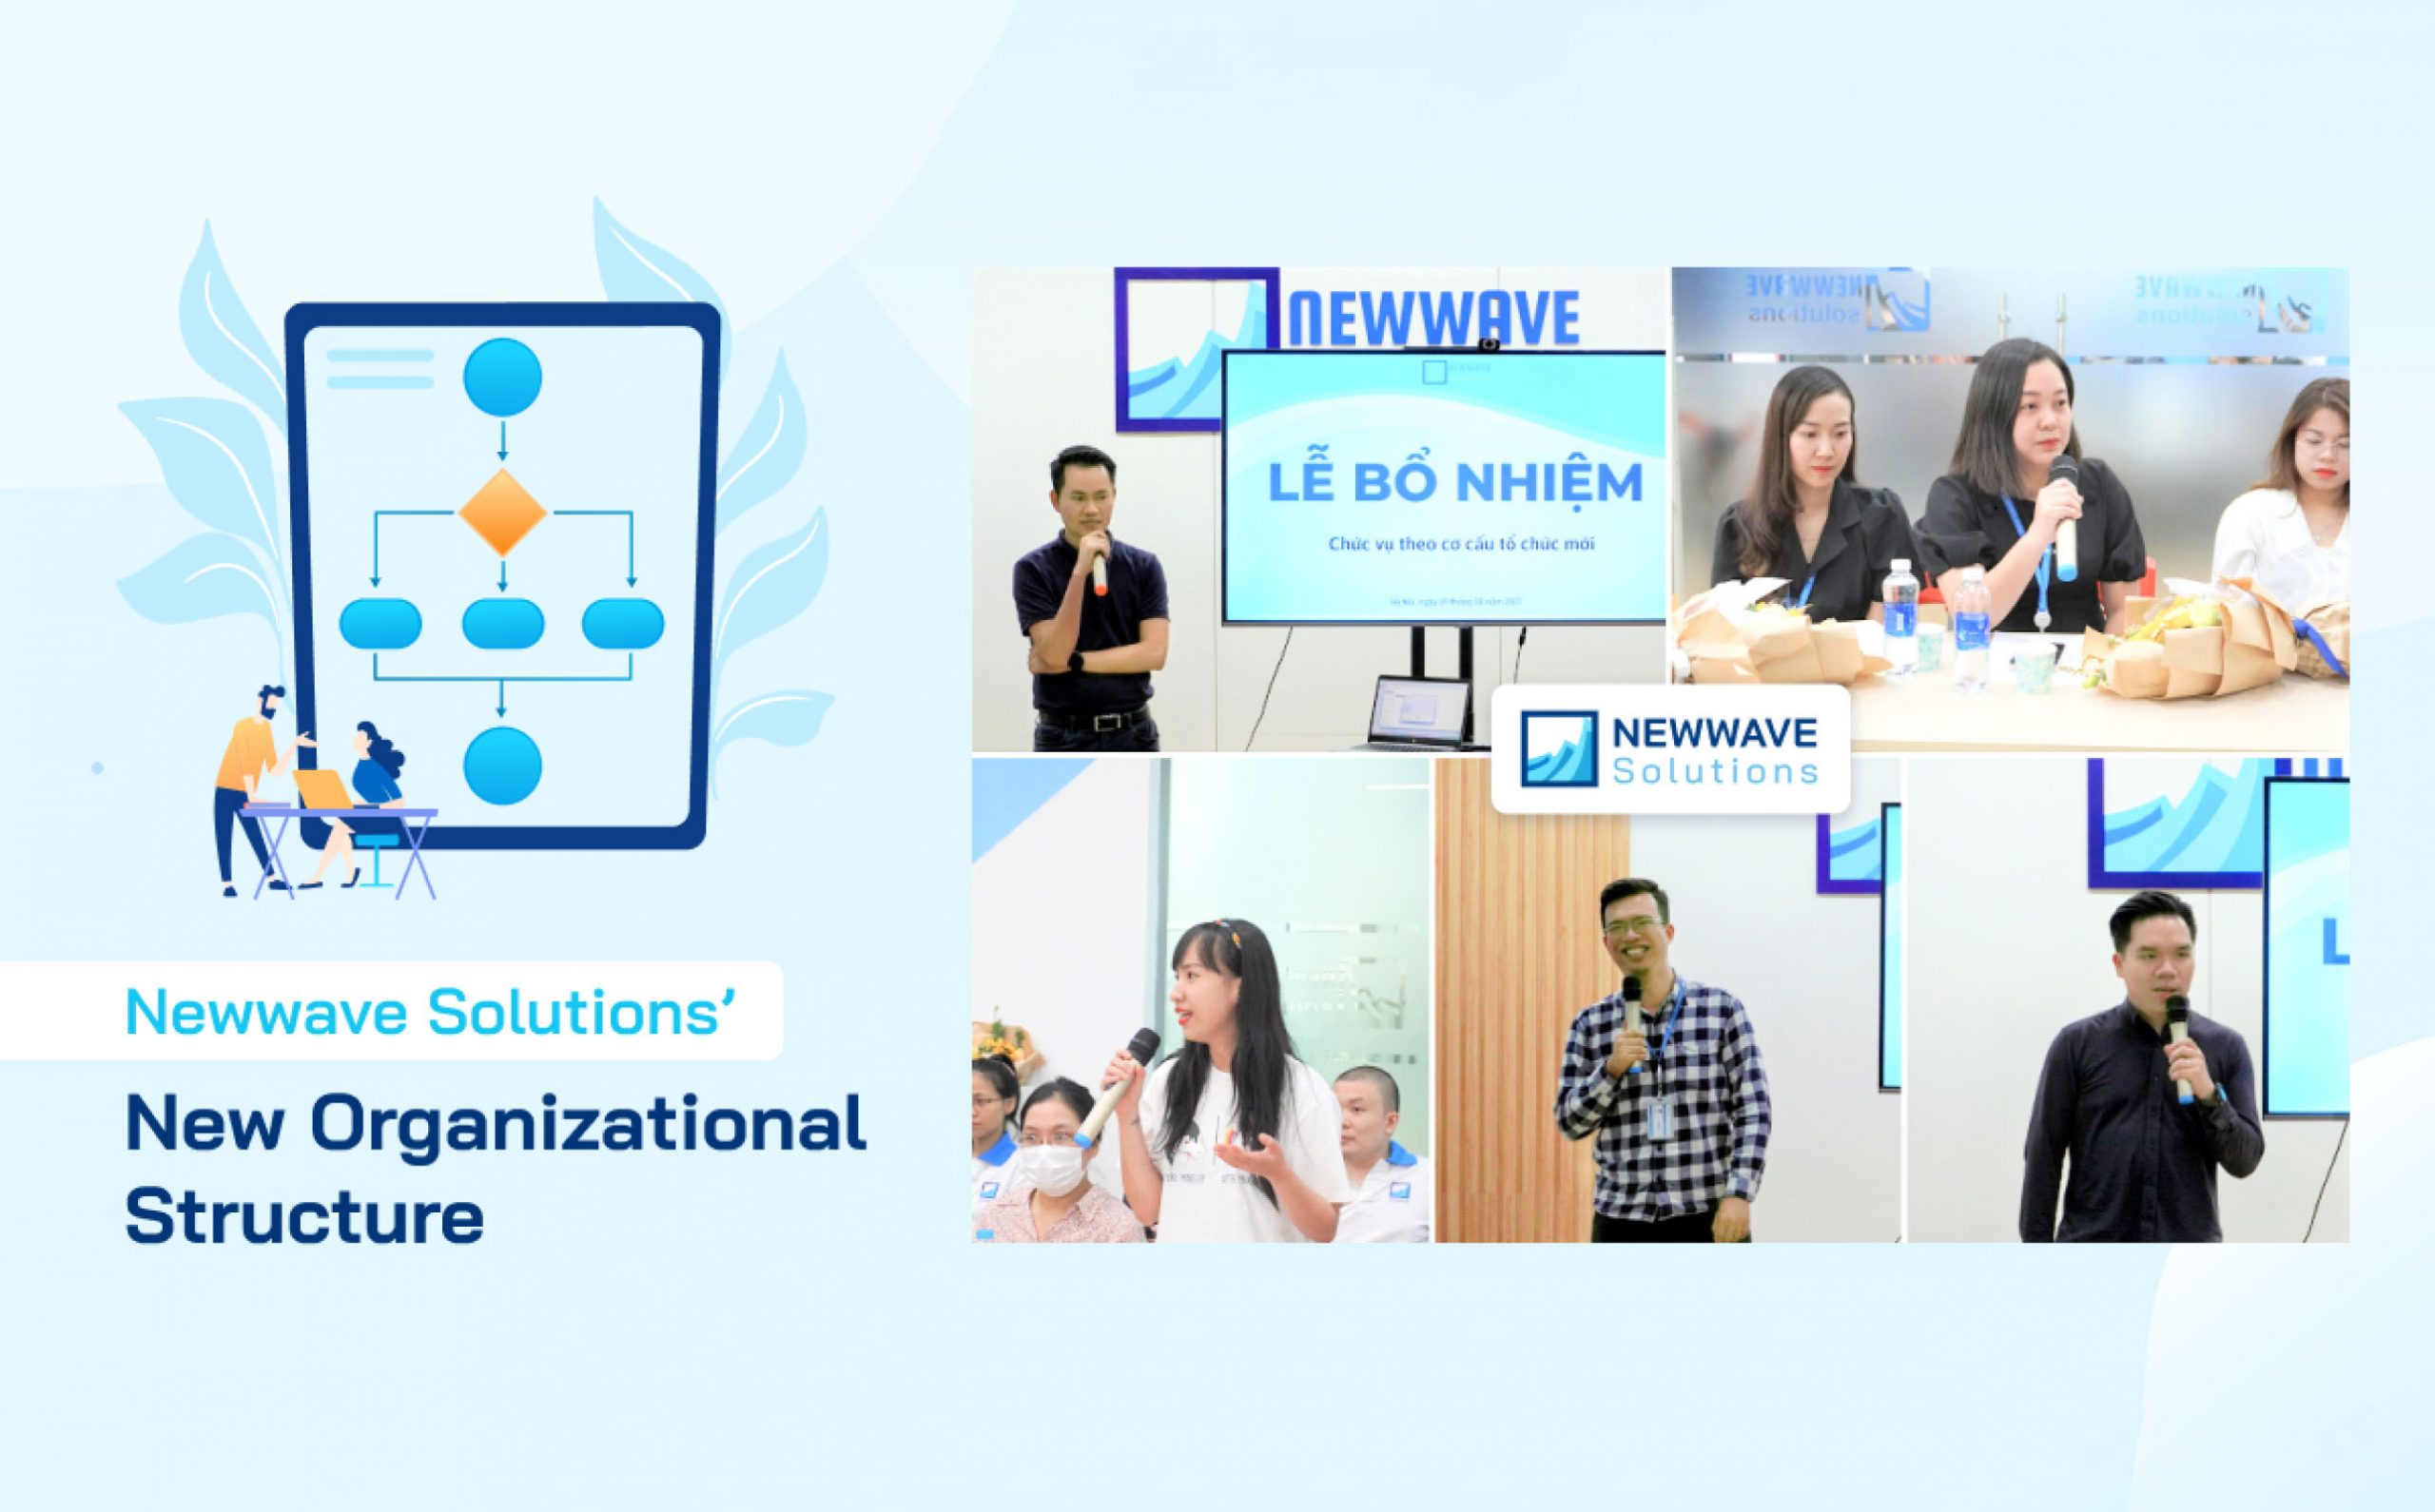 Newwave Solutionsは、7月より開発ライン（ソフトウェア開発）、サポートライン、バックオフィス、セールス＆マーケティング、NWS-JPの5部門で全く新しい組織構造に正式に移行しました。当社をフォローして、Newwave Solutionsの新しい組織構造をご覧ください！